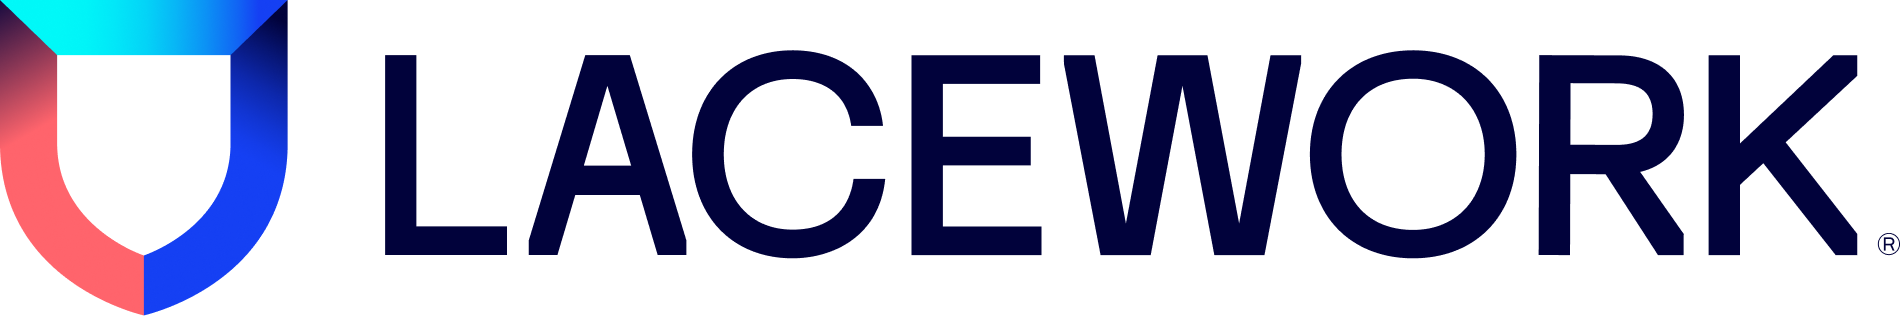 lcaework logo